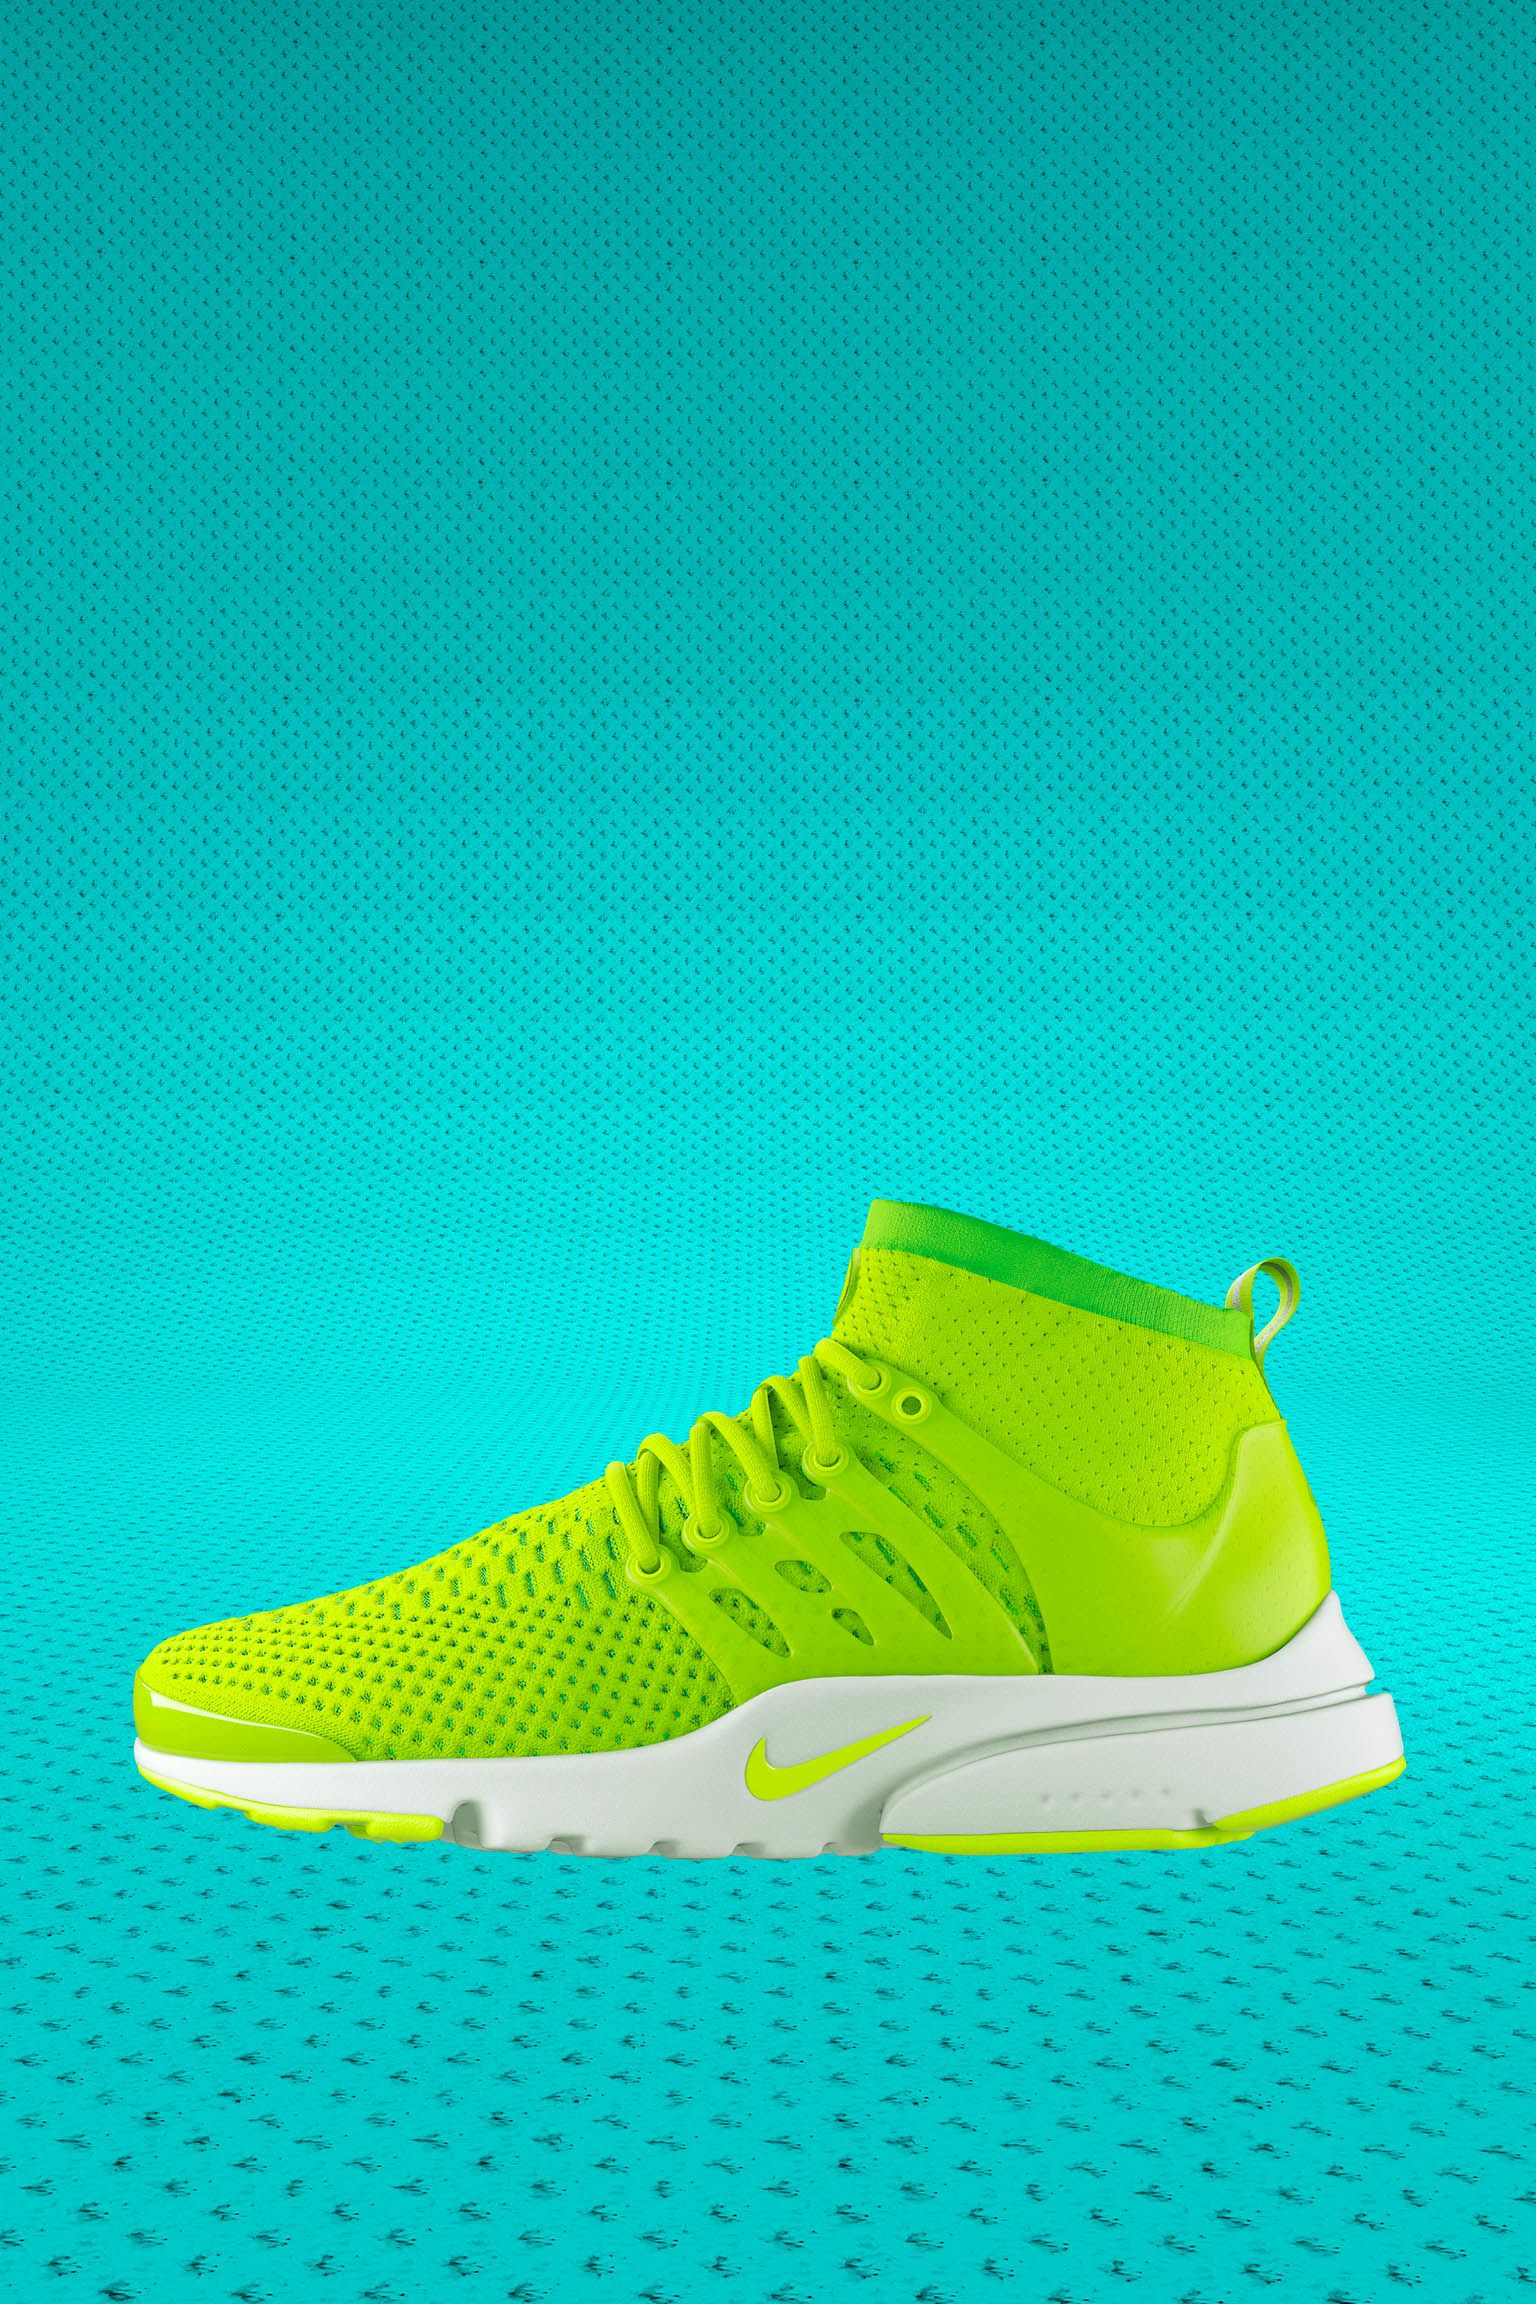 nike air presto flyknit green running shoes